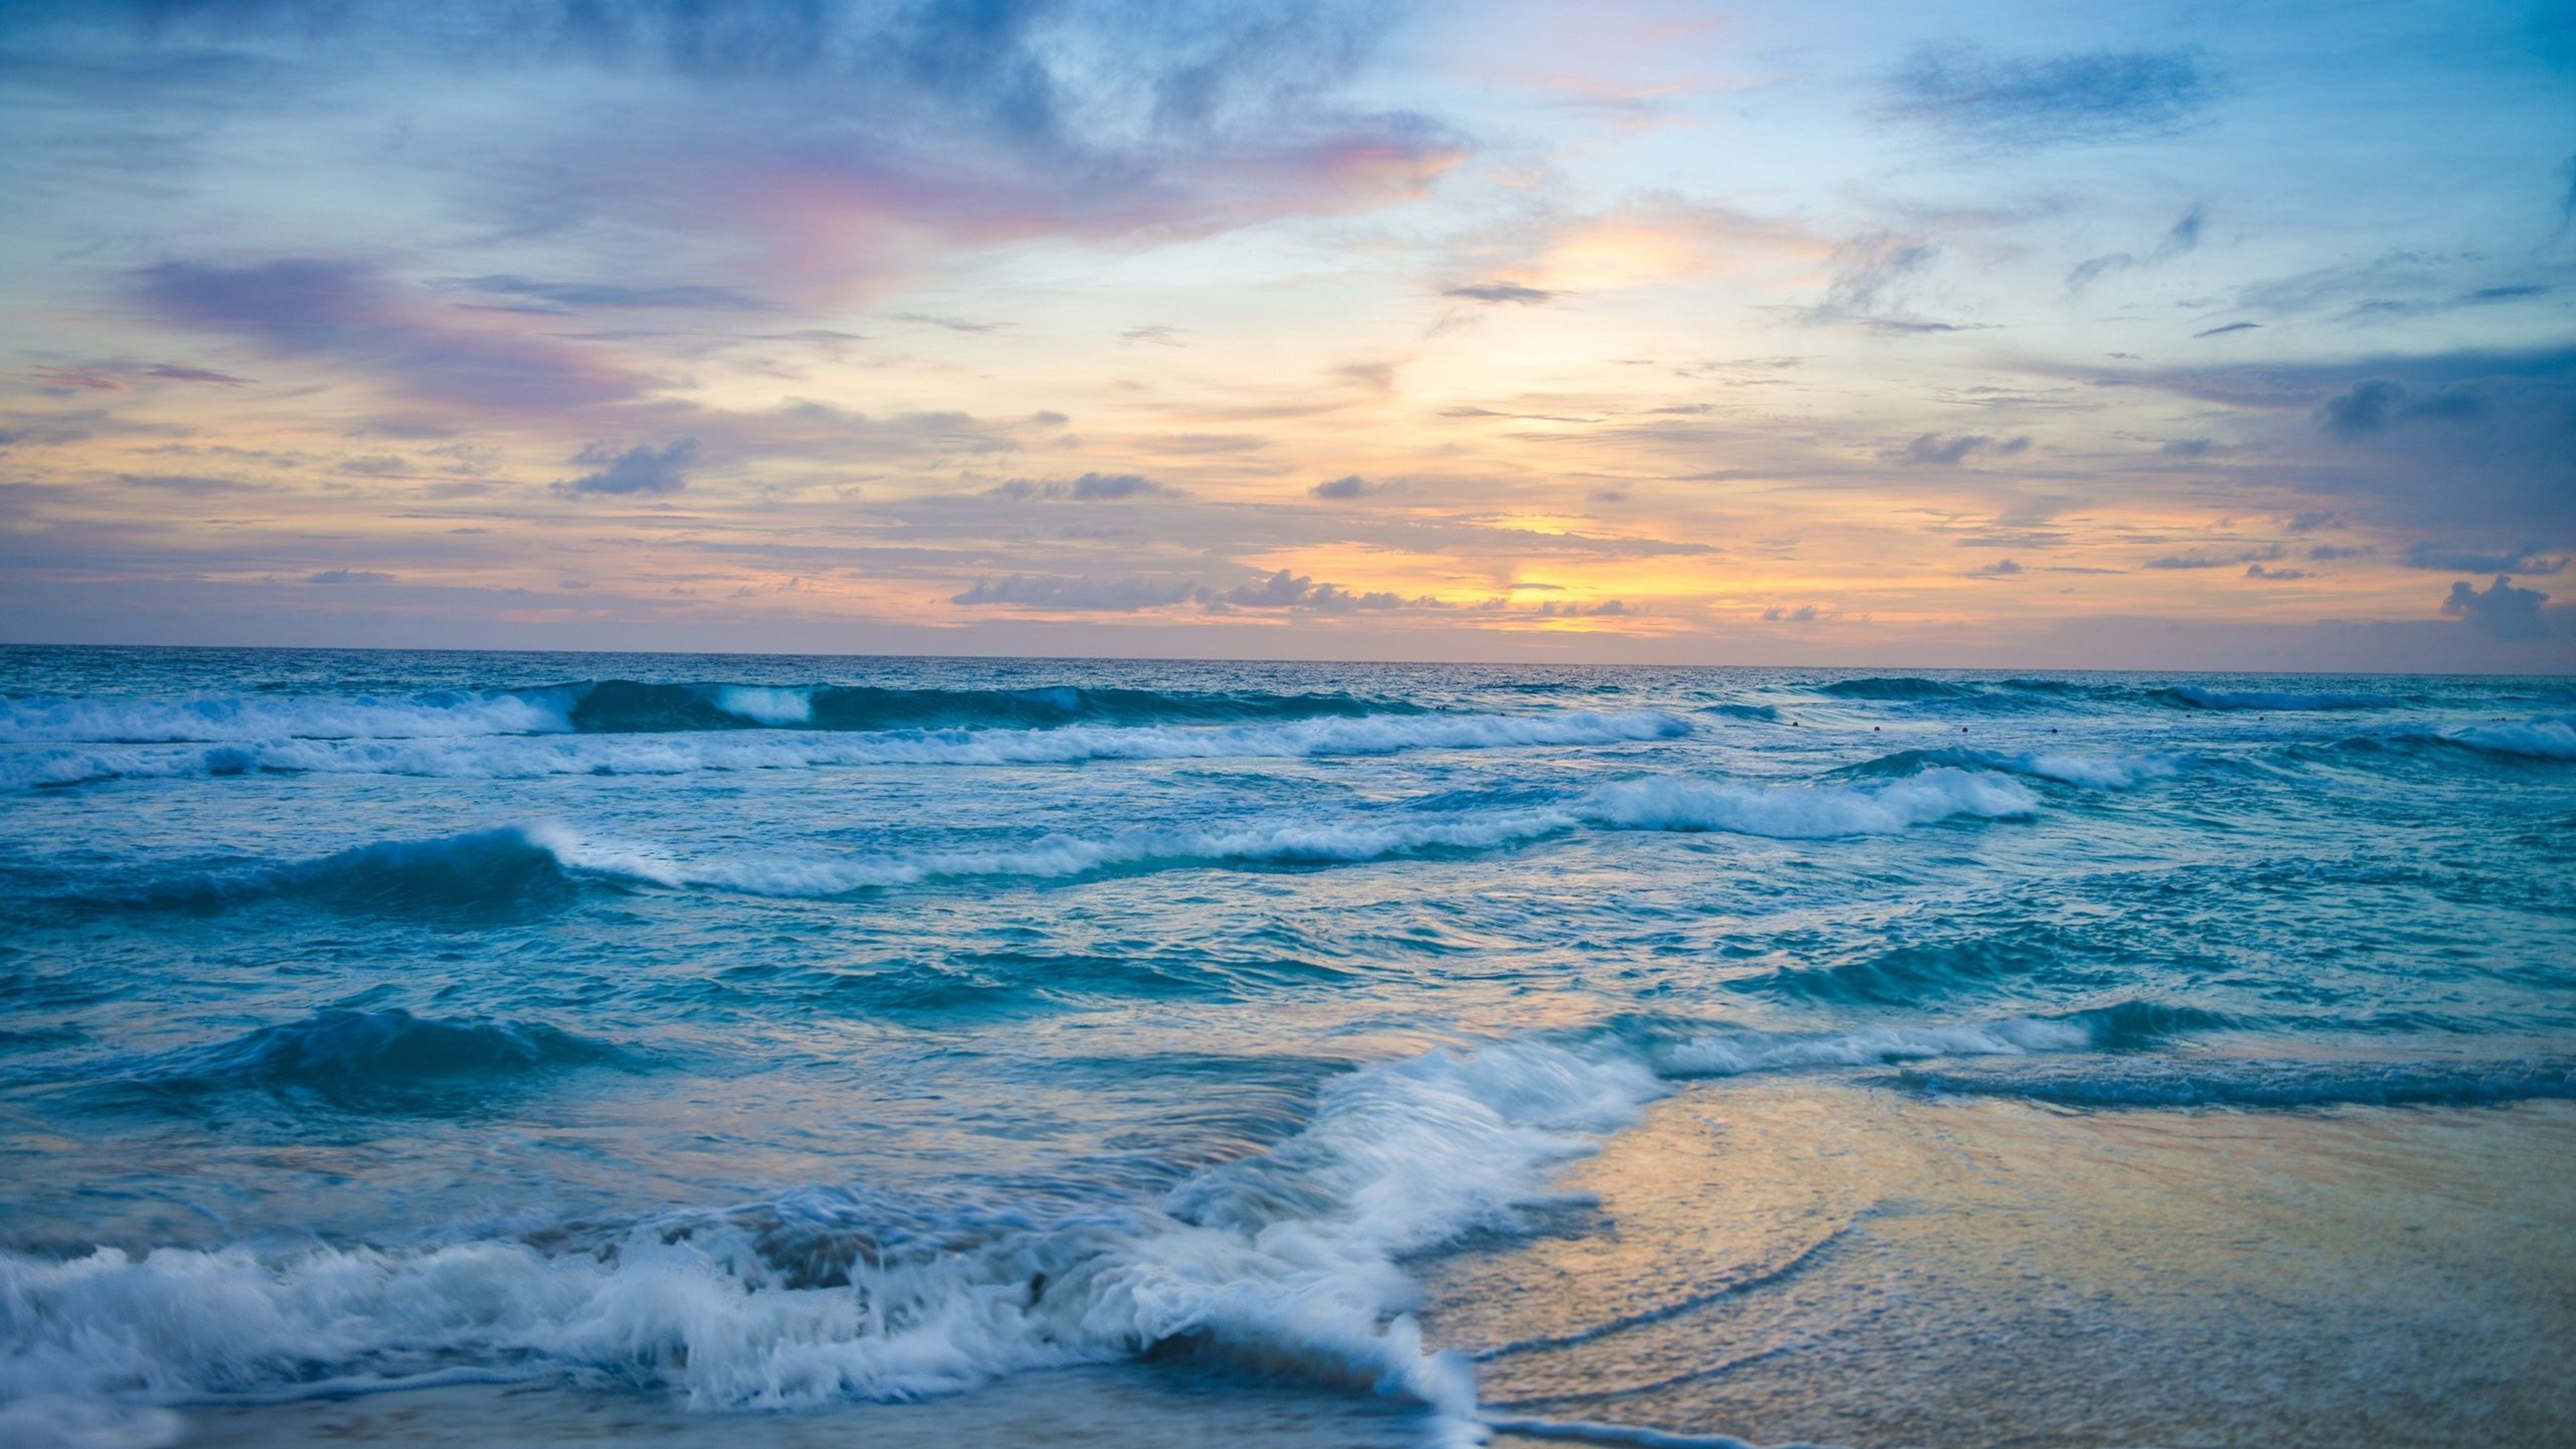 Ocean Waves at Sunset, HD Nature, 4k Wallpaper, Image